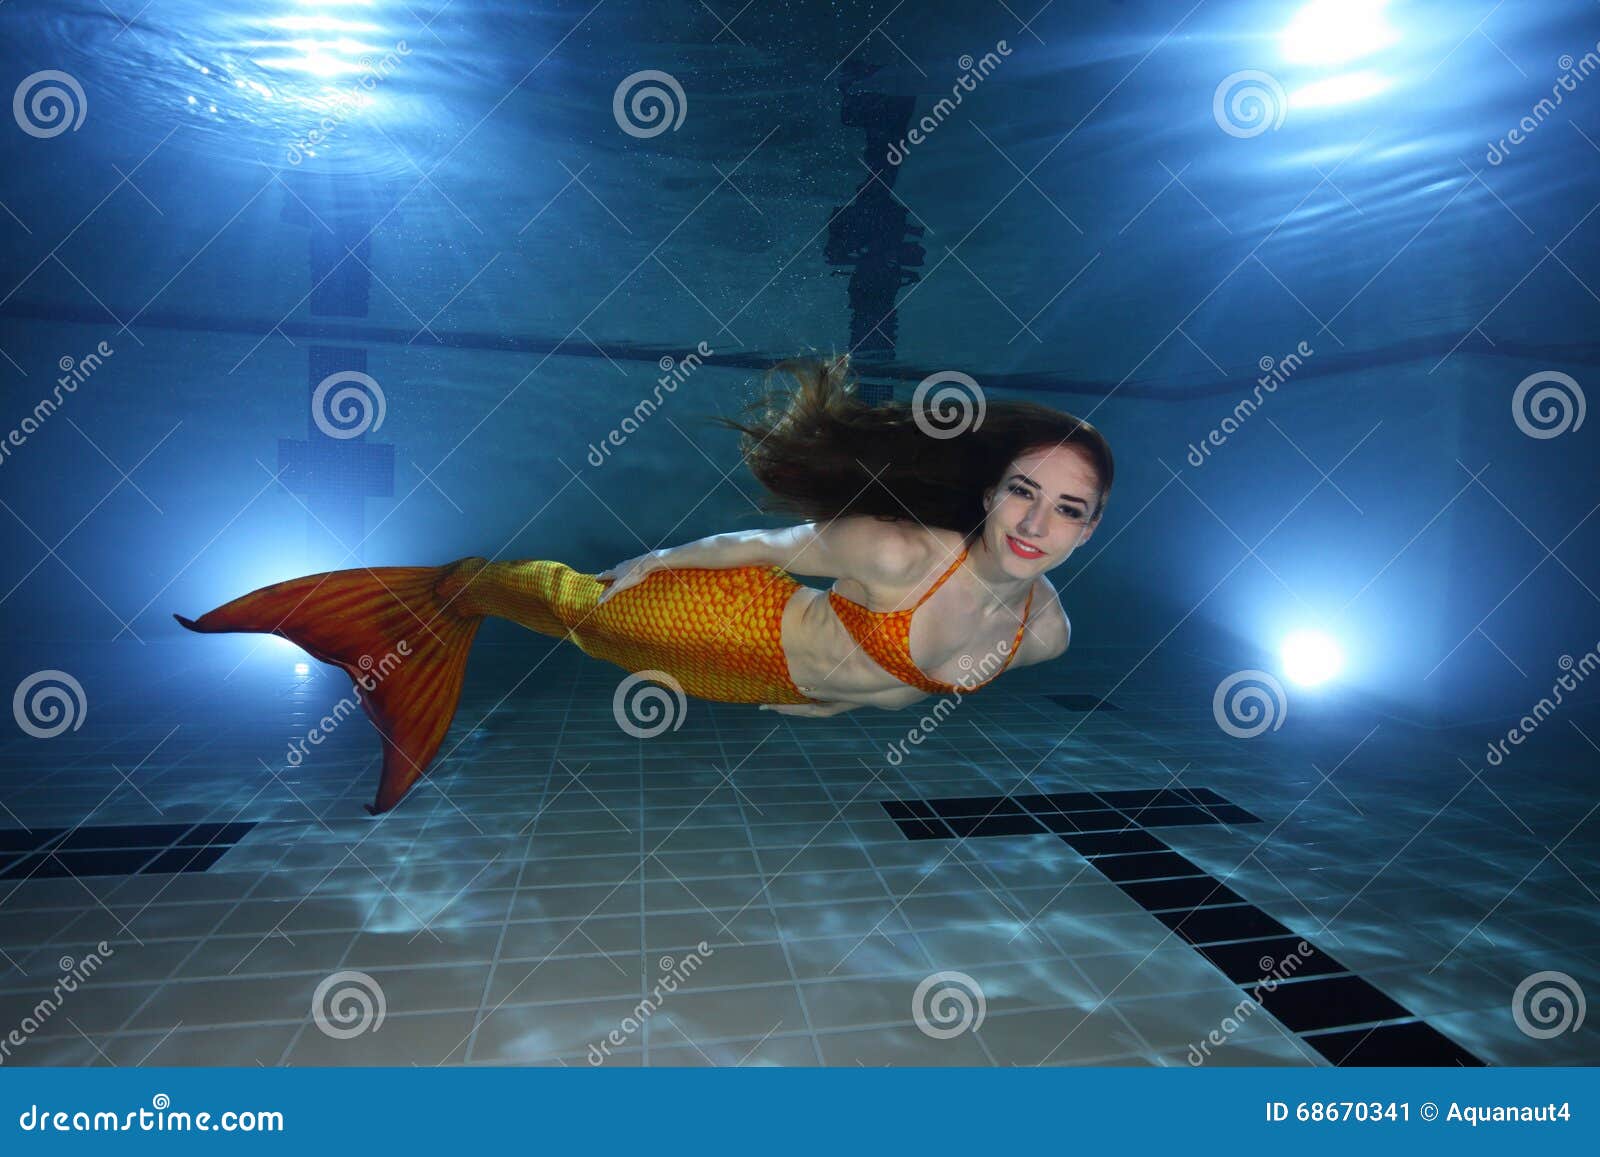 2,363 Swimming Mermaid Stock Photos - Free & Royalty-Free Stock